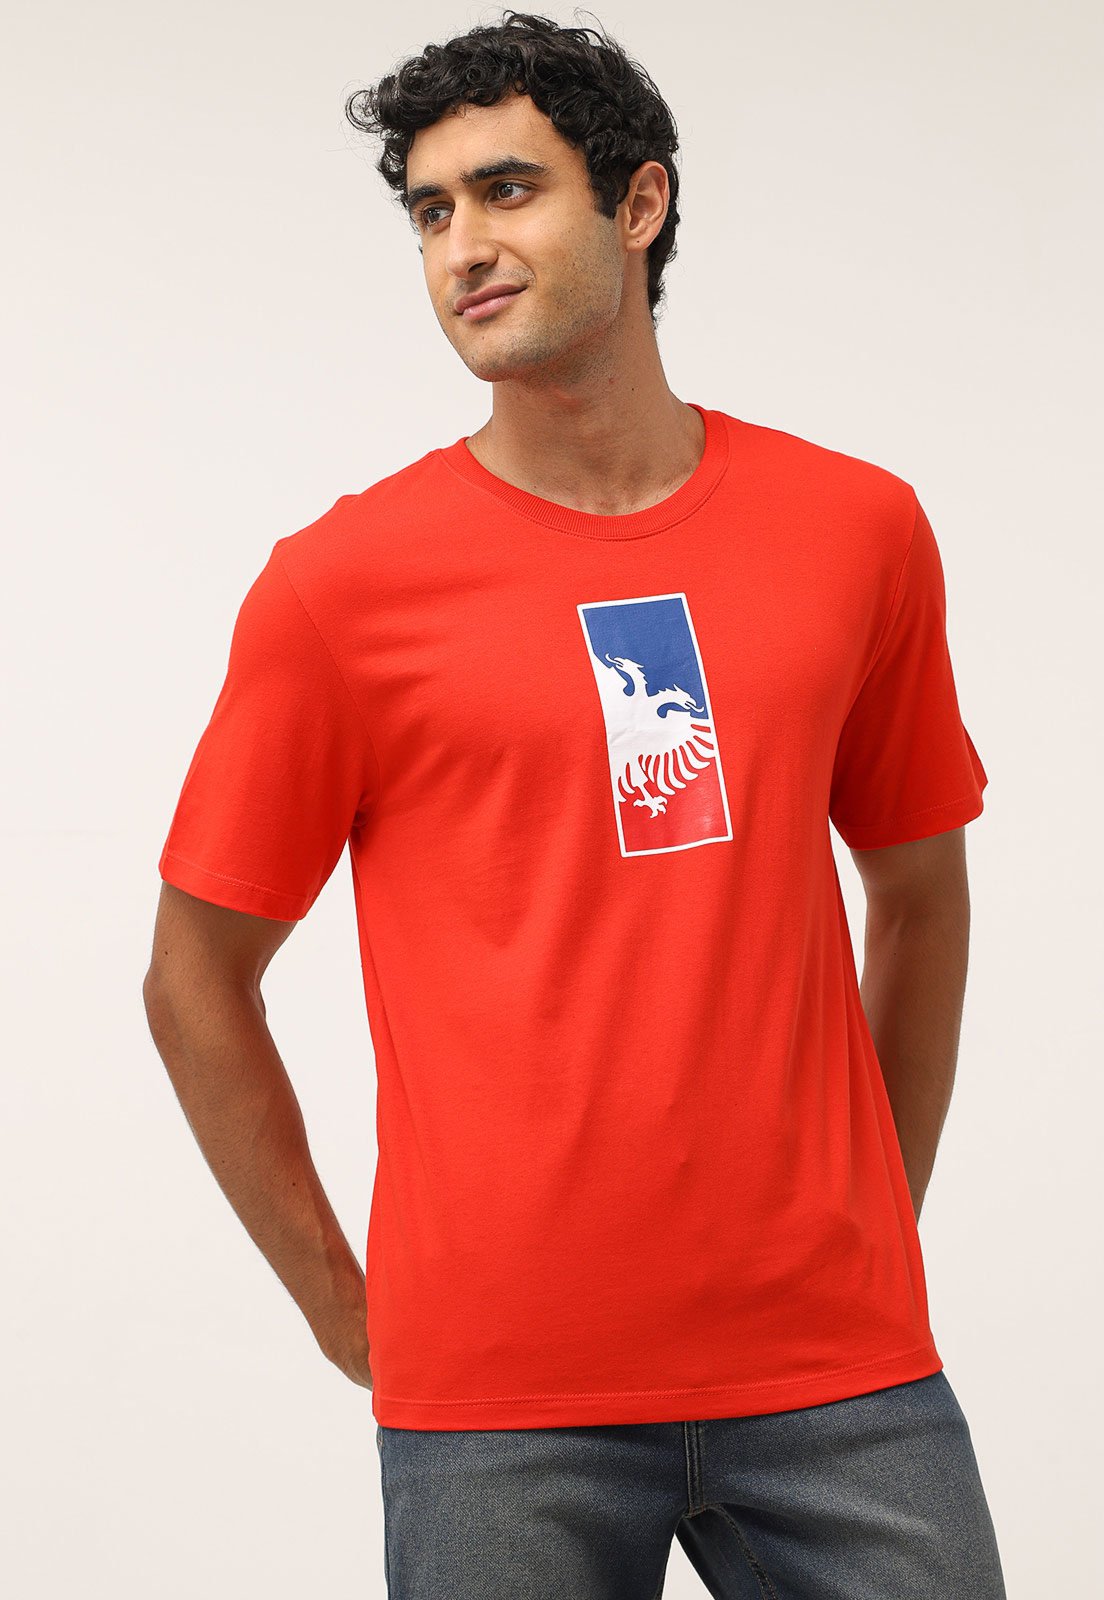 Camiseta Cavalera básica com logo - Laranja